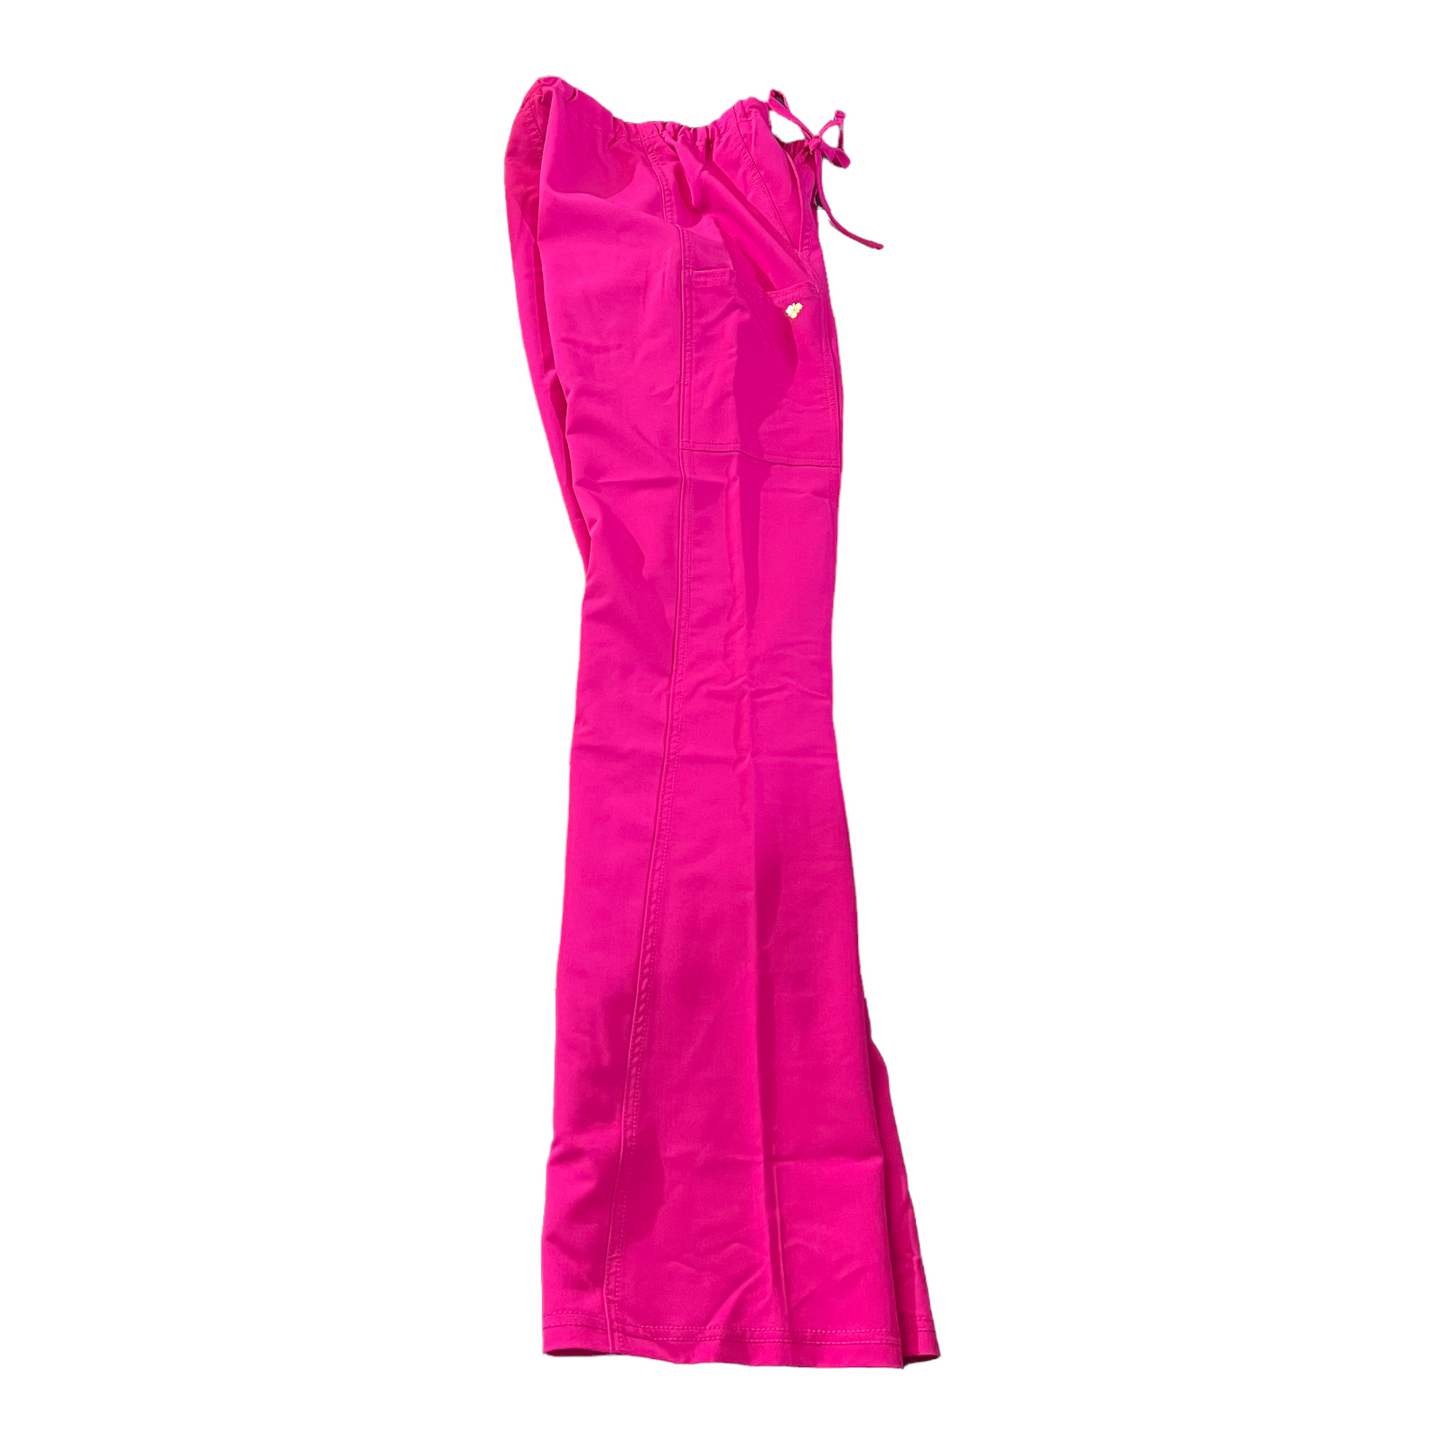 NEW Careisma Hot Pink Scrubs Size: XS DrawString Closure, By Sofia Vergara